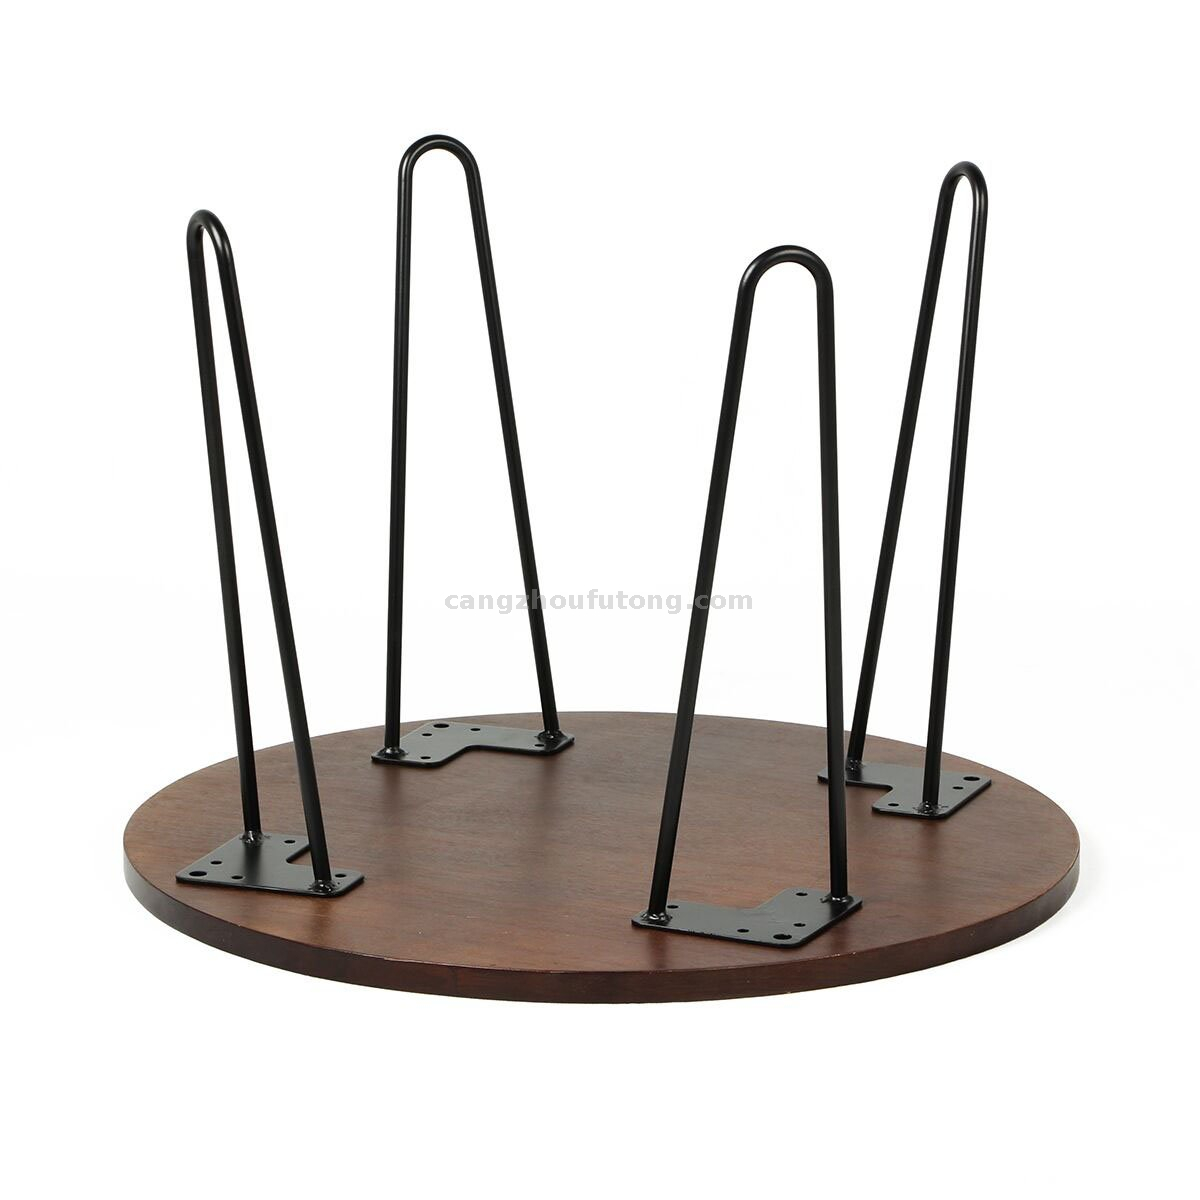 Hairpin Legs Coffee Table Metal Material